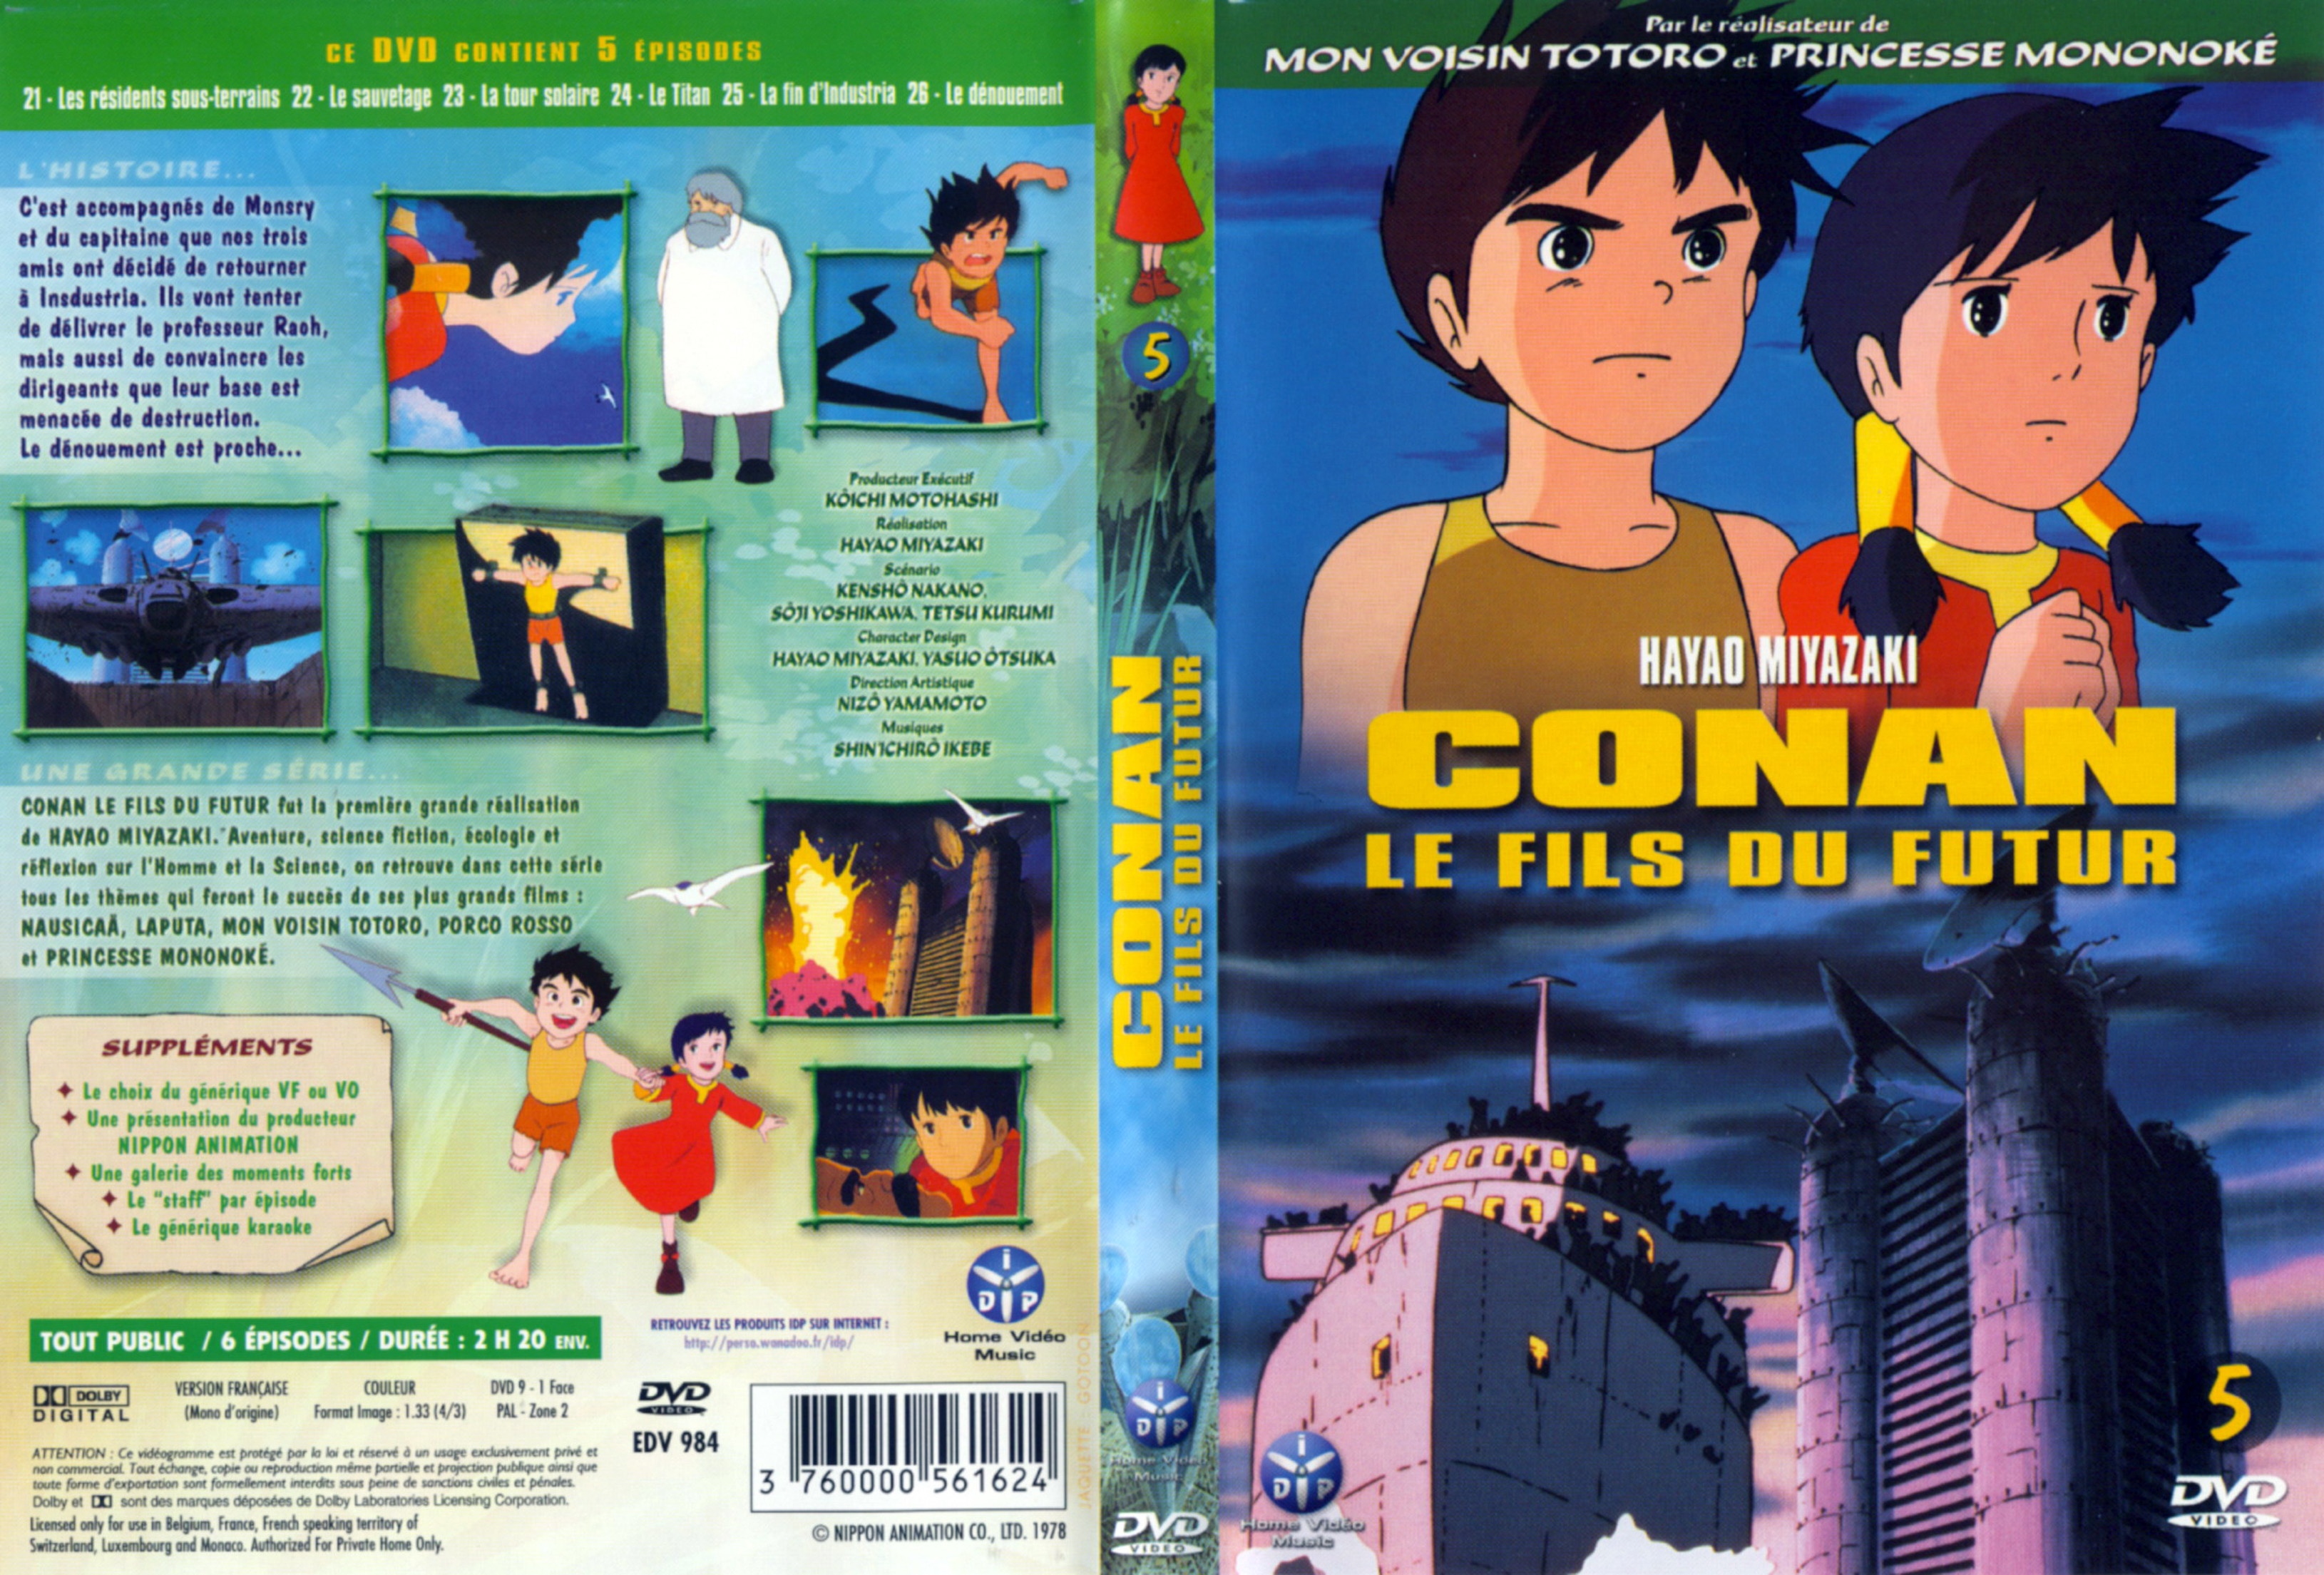 Jaquette DVD Conan le fils du futur vol 5